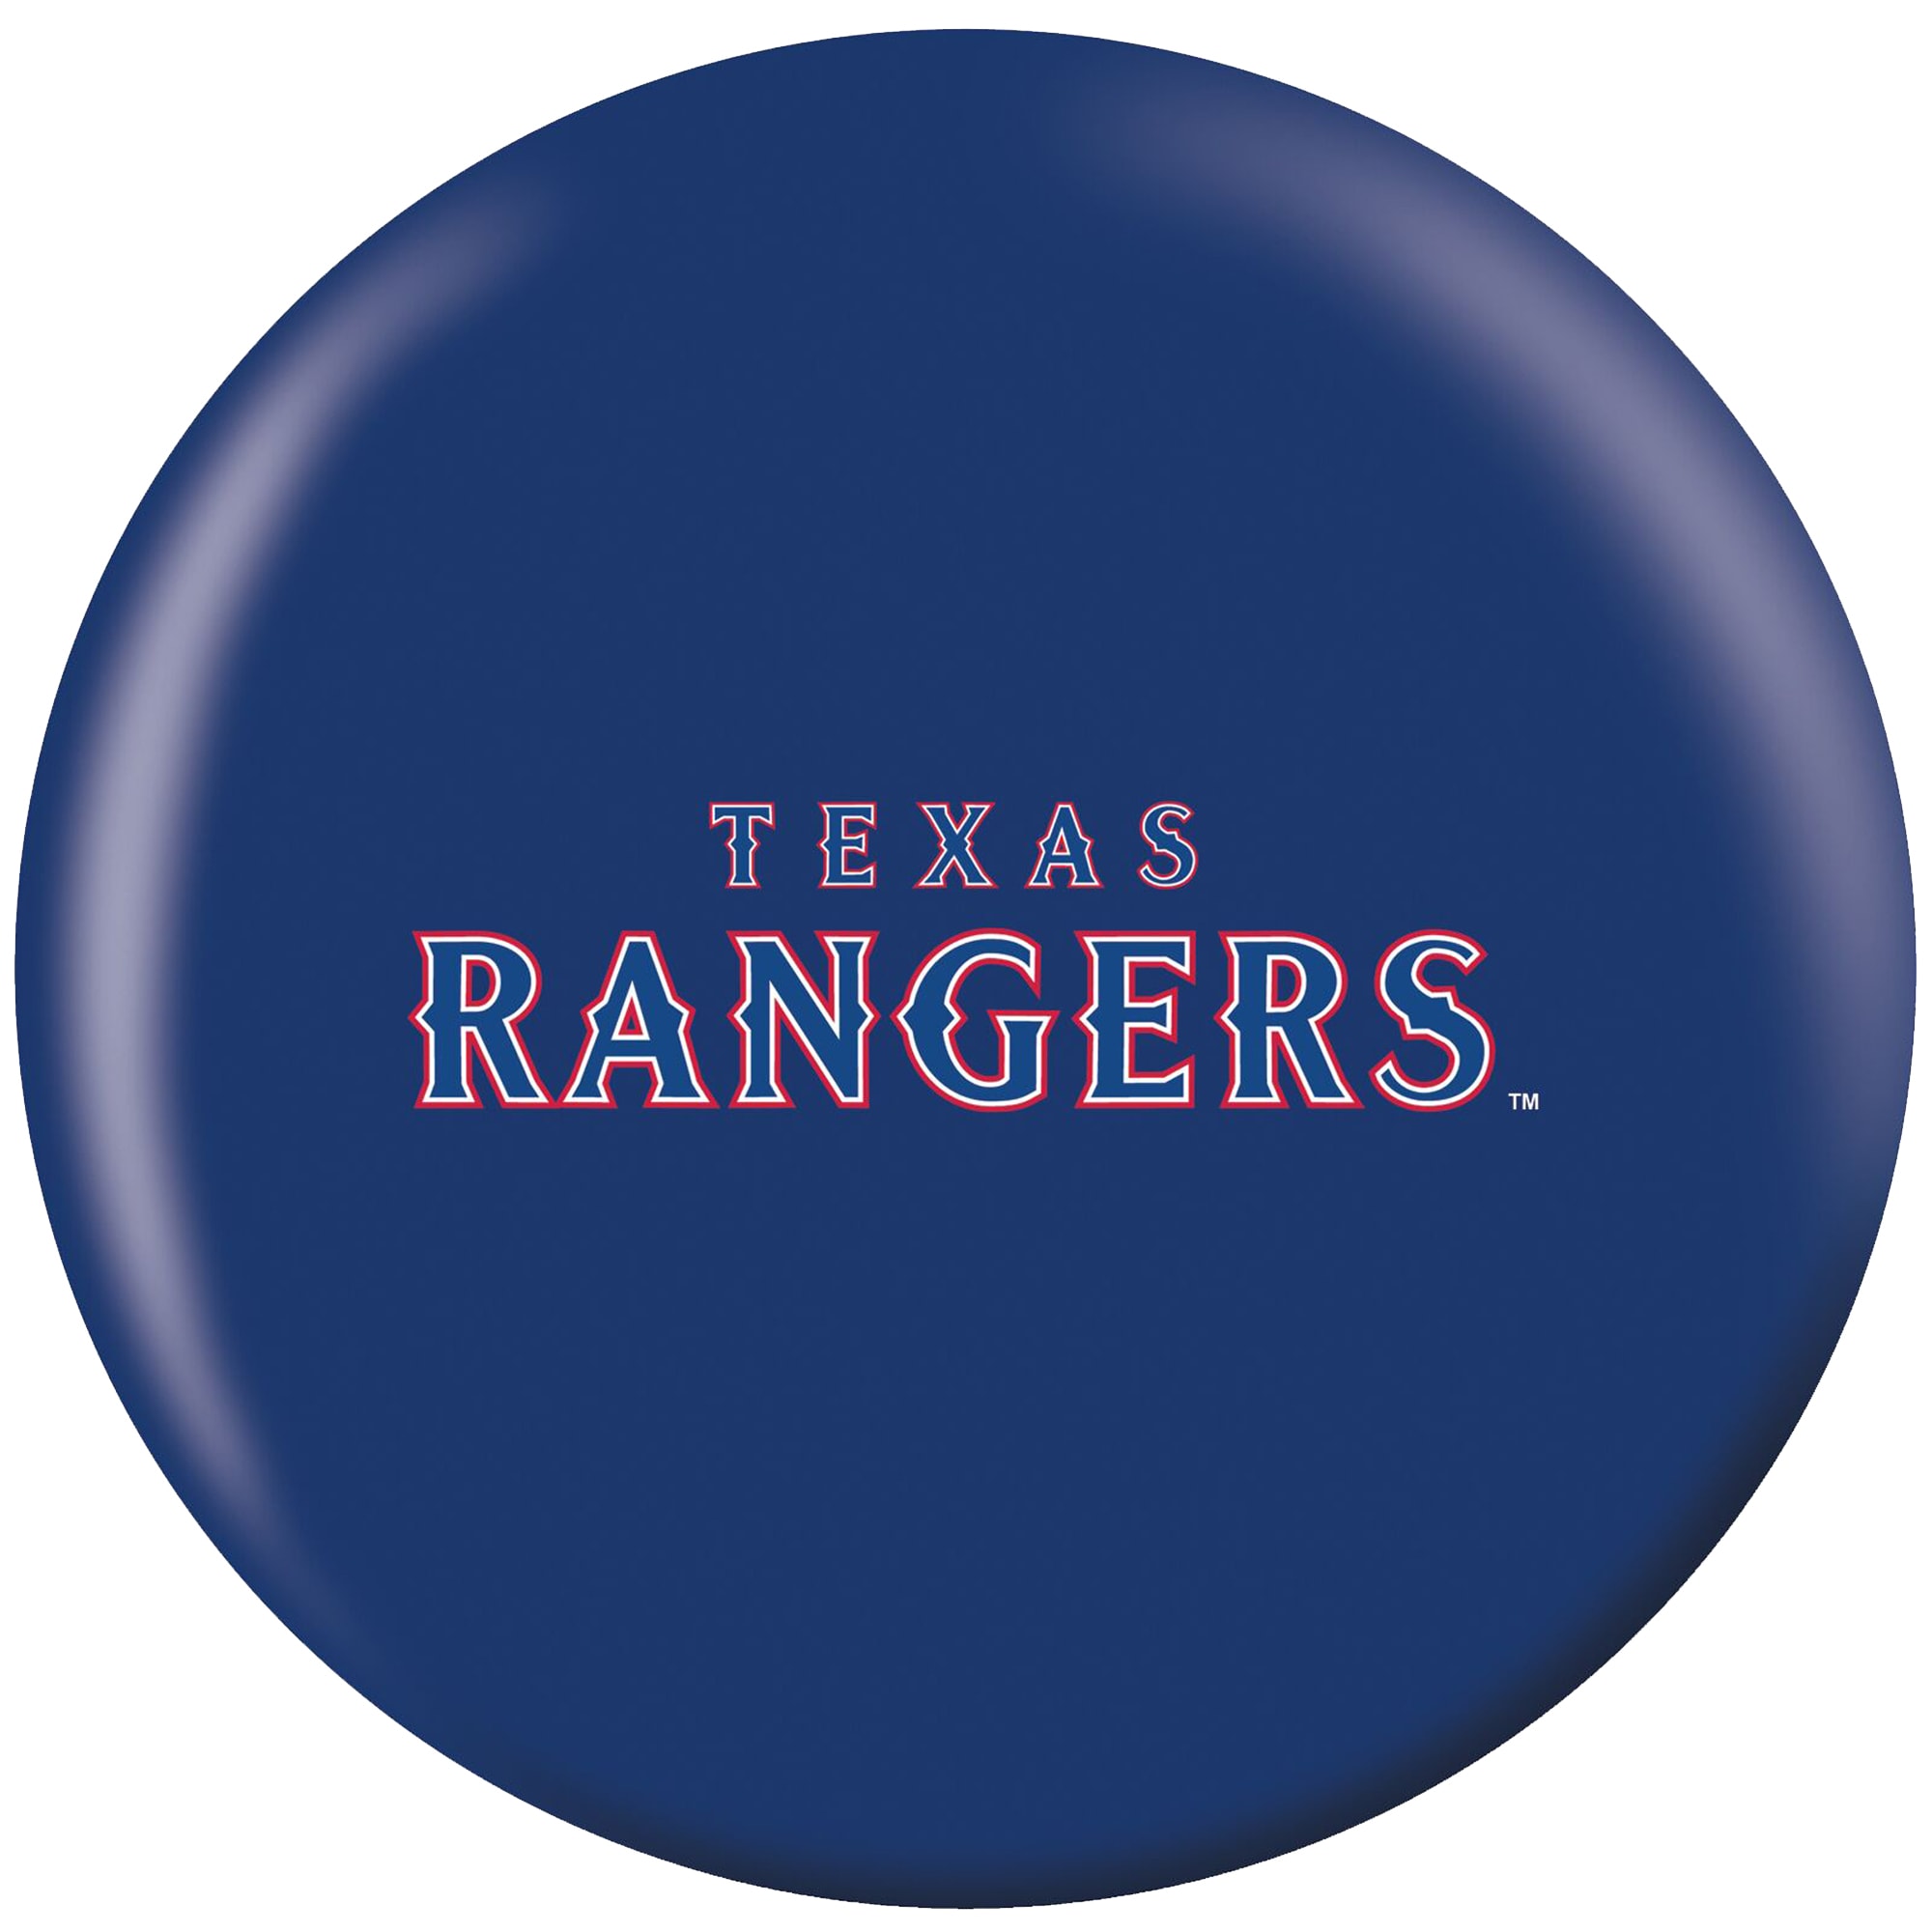 Texas Rangers Bowling Ball - image 2 of 2